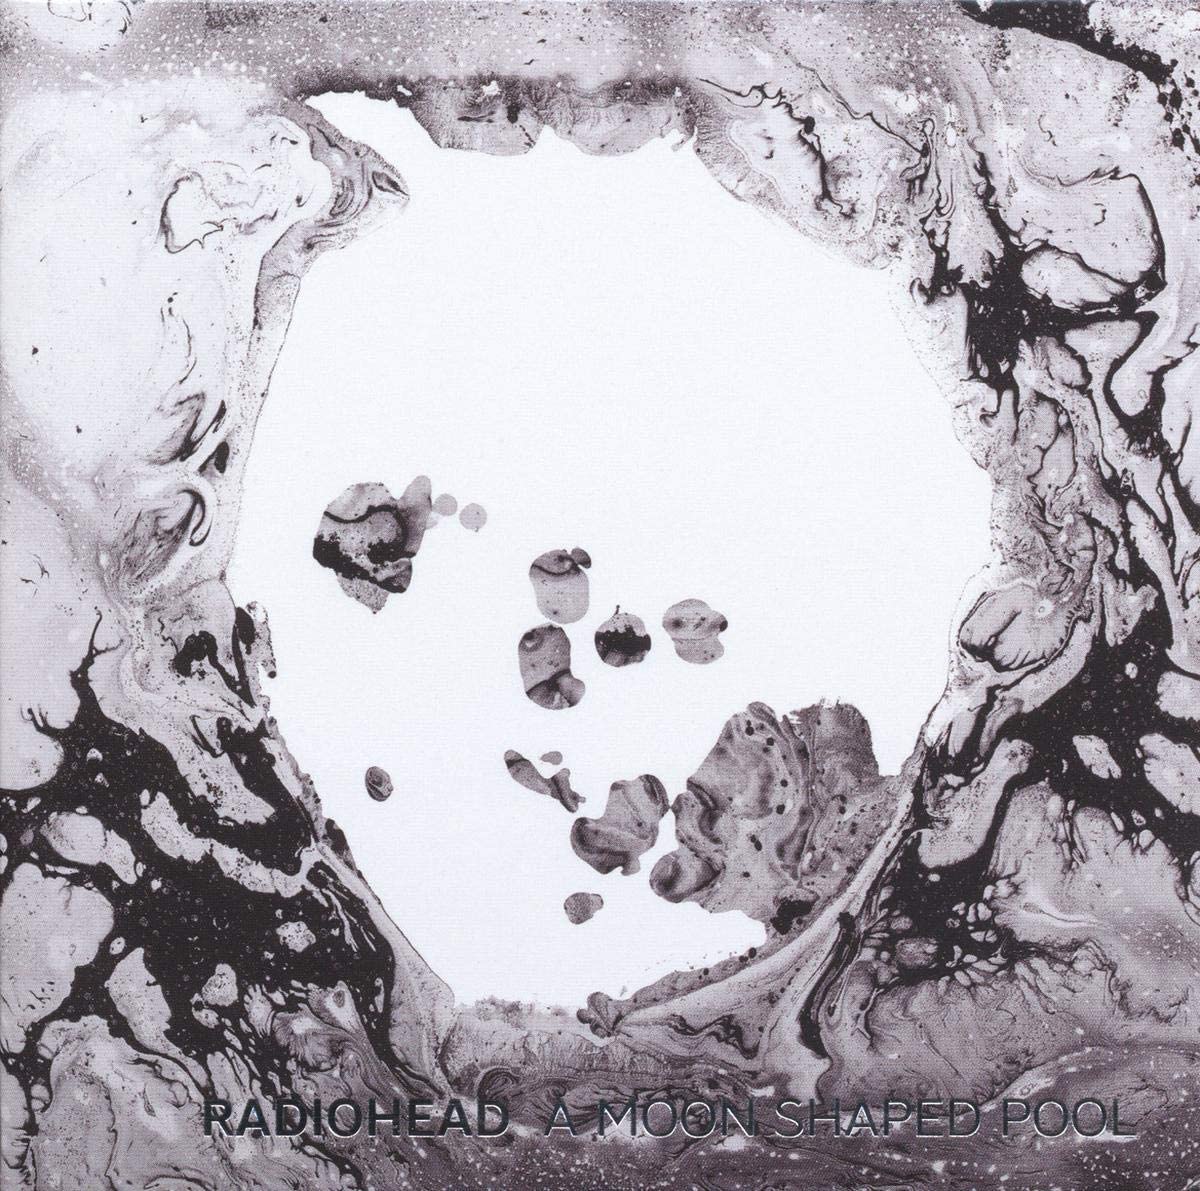 Radiohead - A Moon Shaped Pool - 2 x 180 GRAM VINYL LP SET